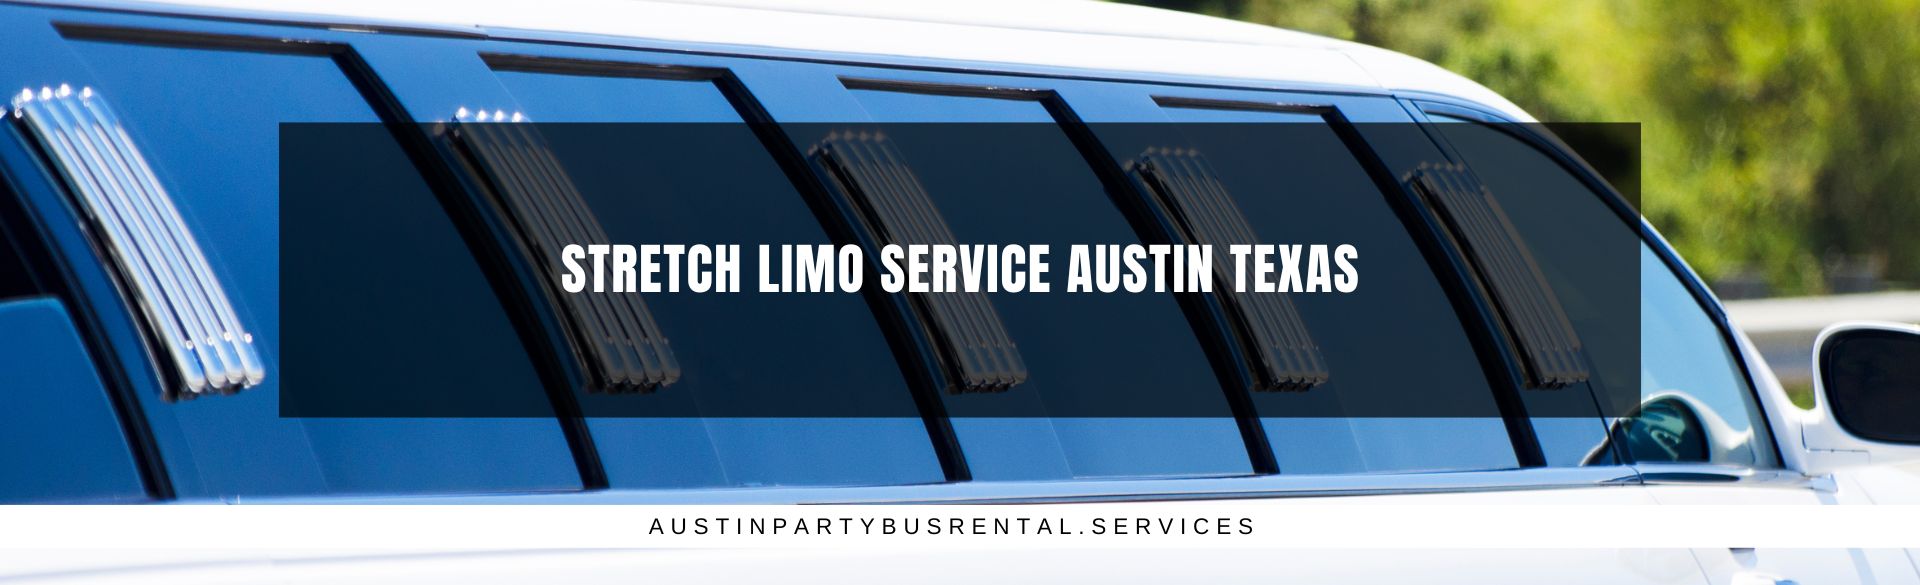 Stretch Limo Service Austin Texas